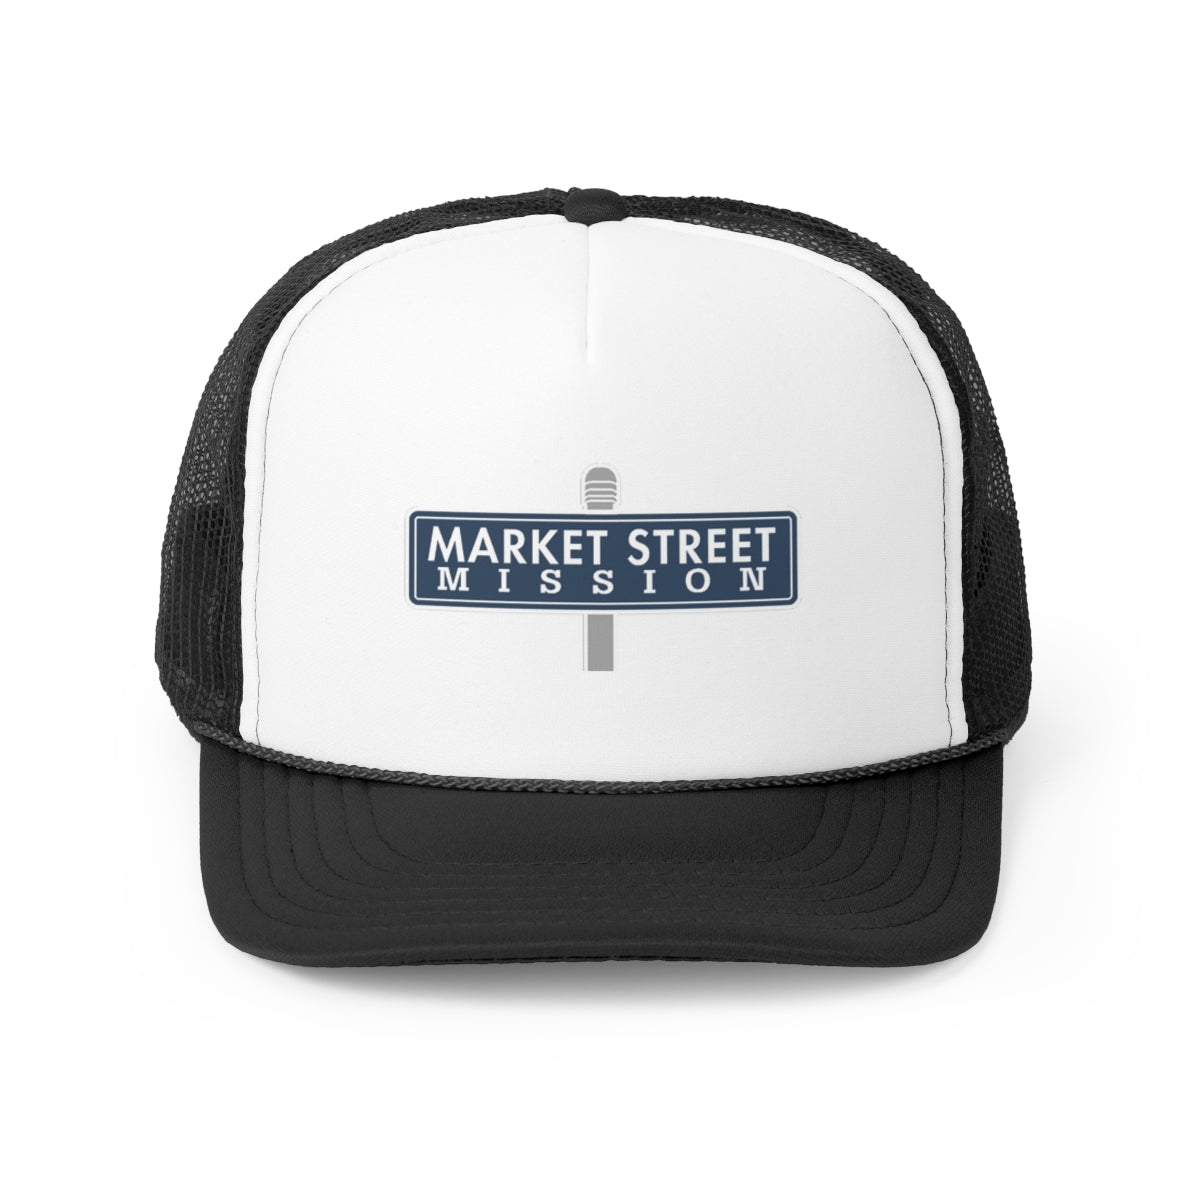 MSM - Street Sign Hat